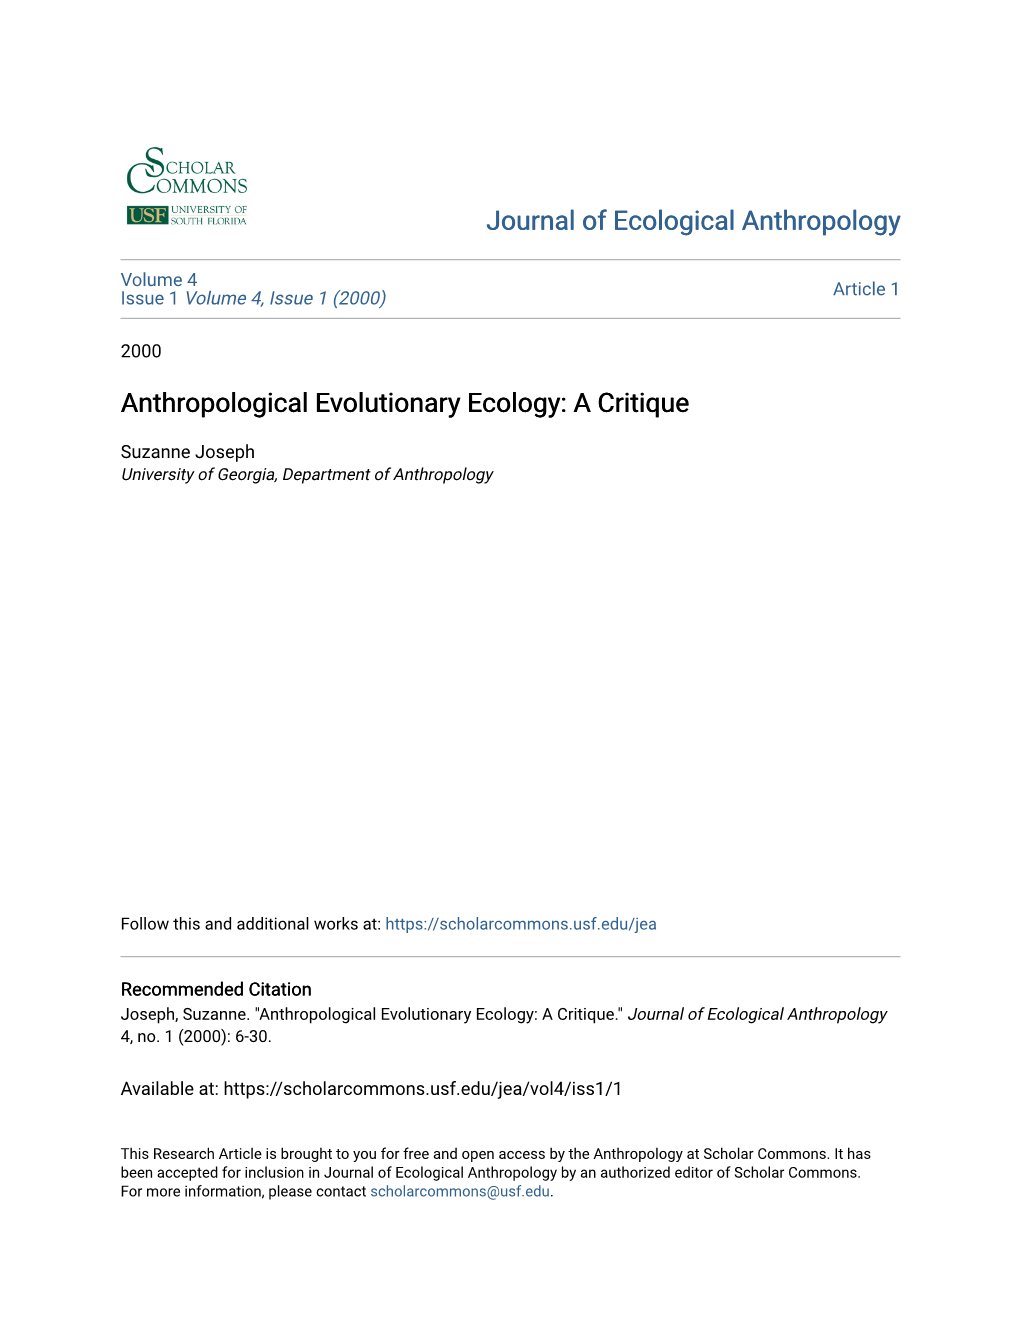 Anthropological Evolutionary Ecology: a Critique